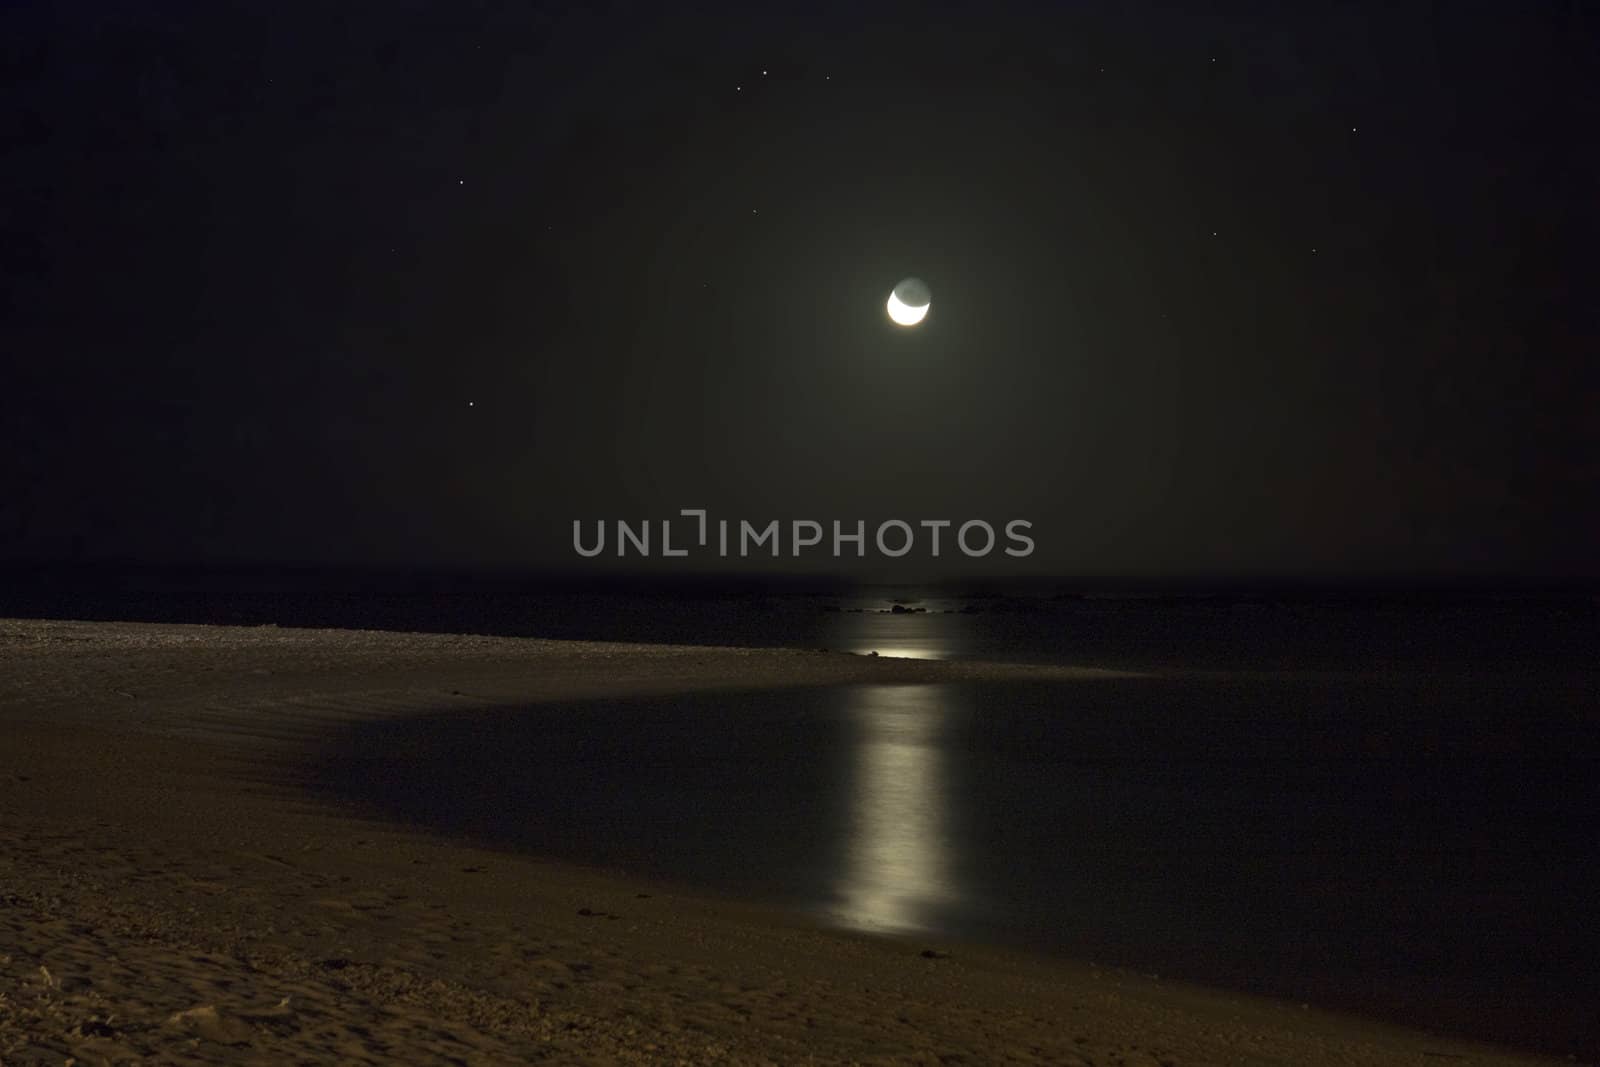 Moonlit beach at night, the moonlight dimly lighting the bay